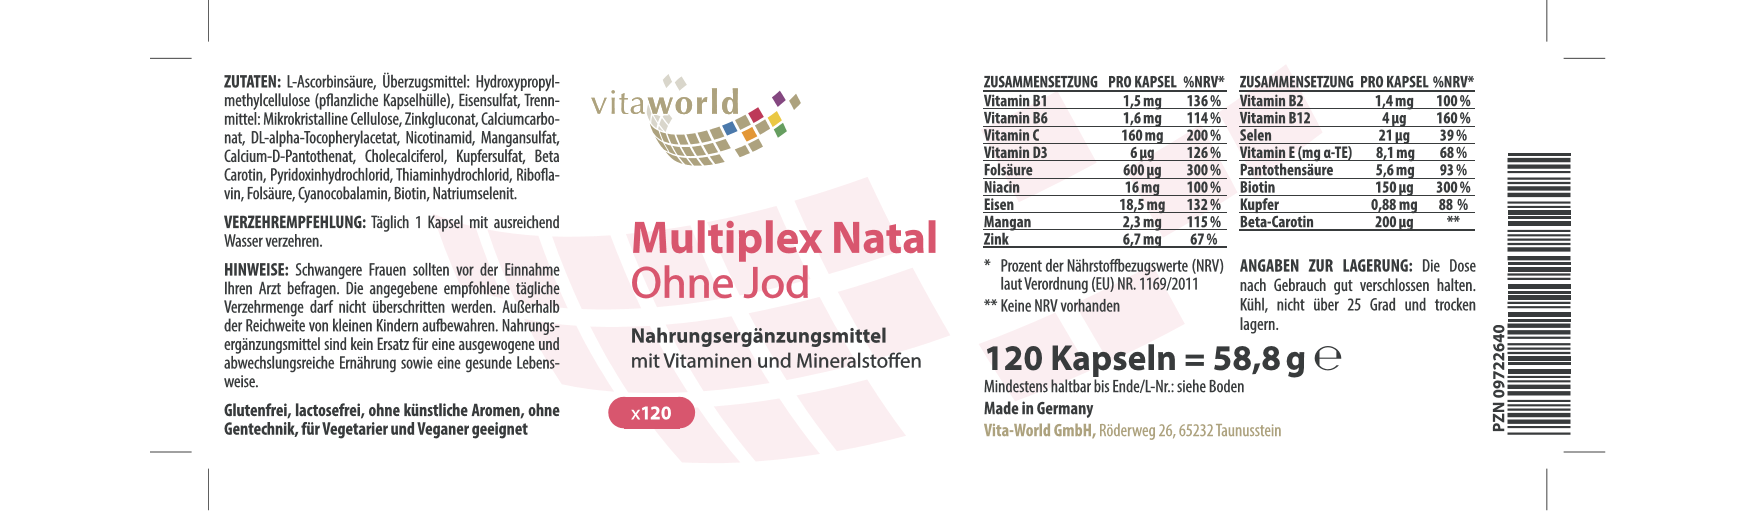 Multiplex Natal ohne Jod (120 Kps)